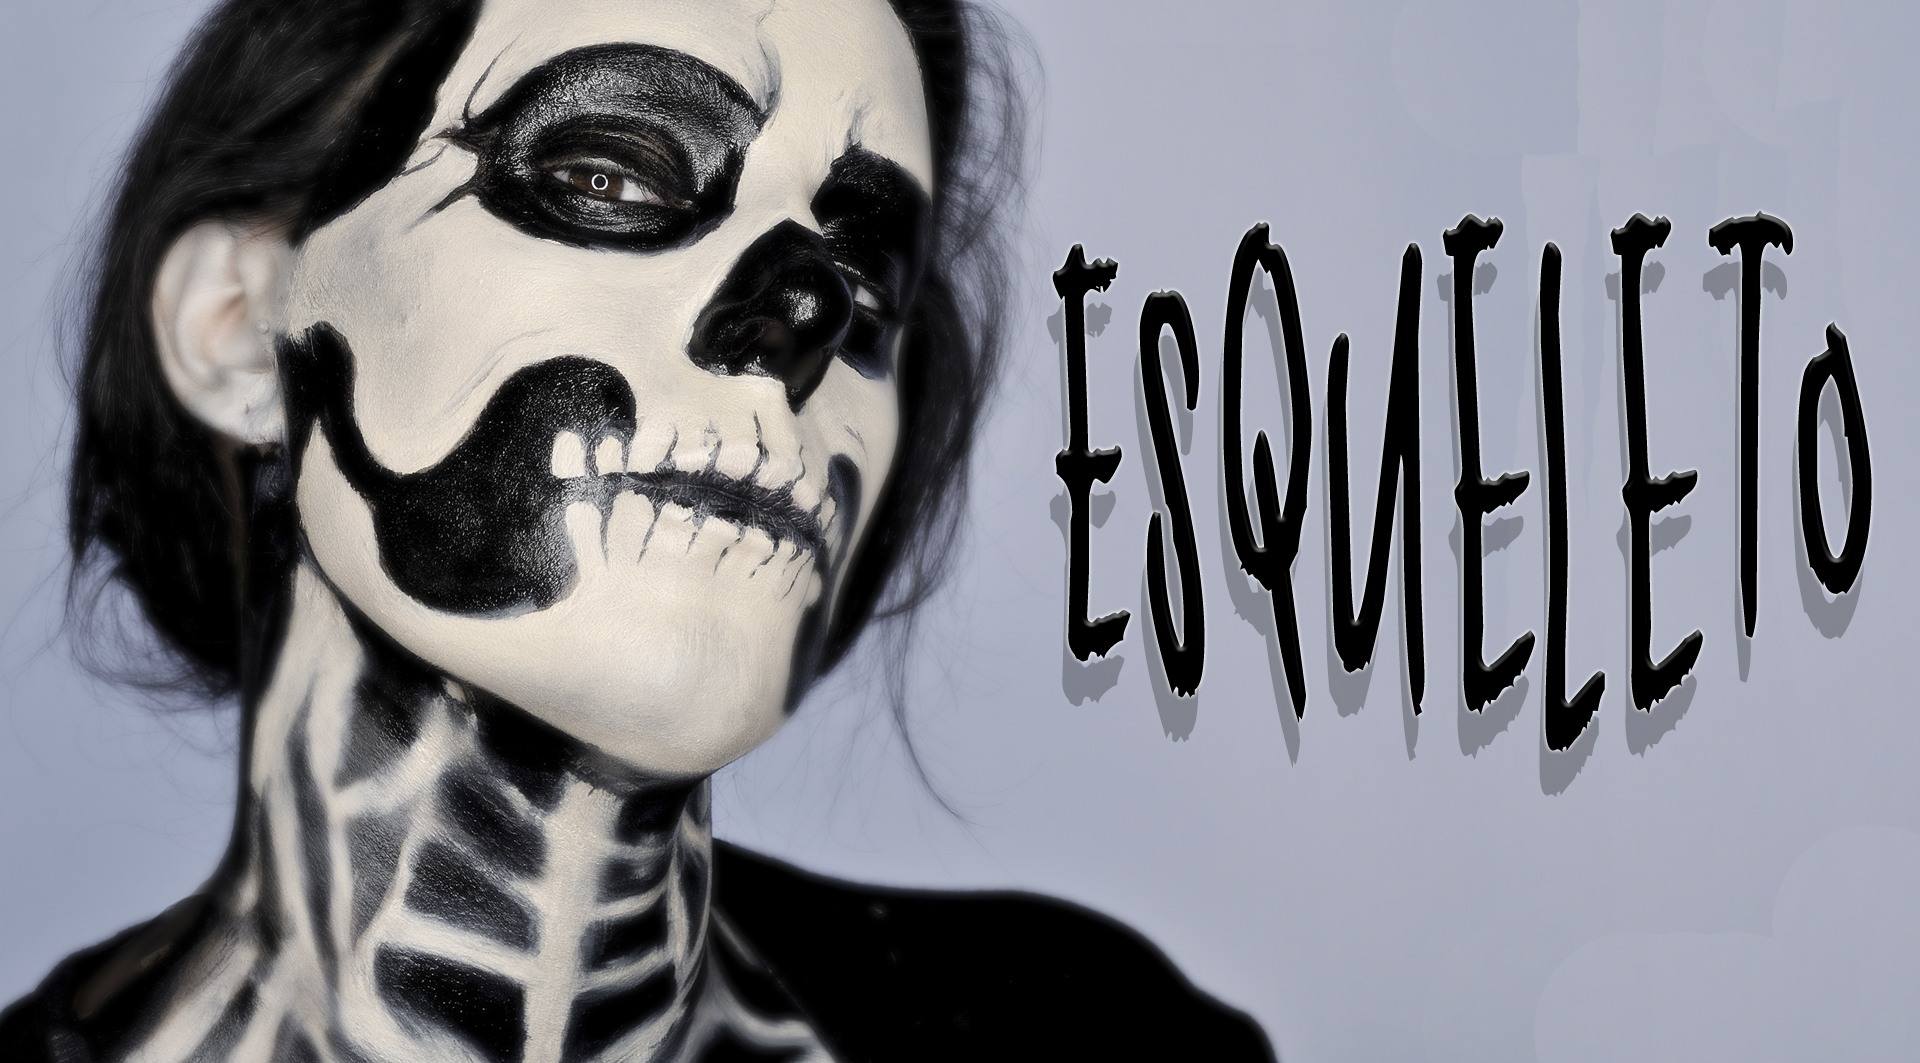 Maquillaje Halloween Esqueleto tutorial - Silvia Quirós